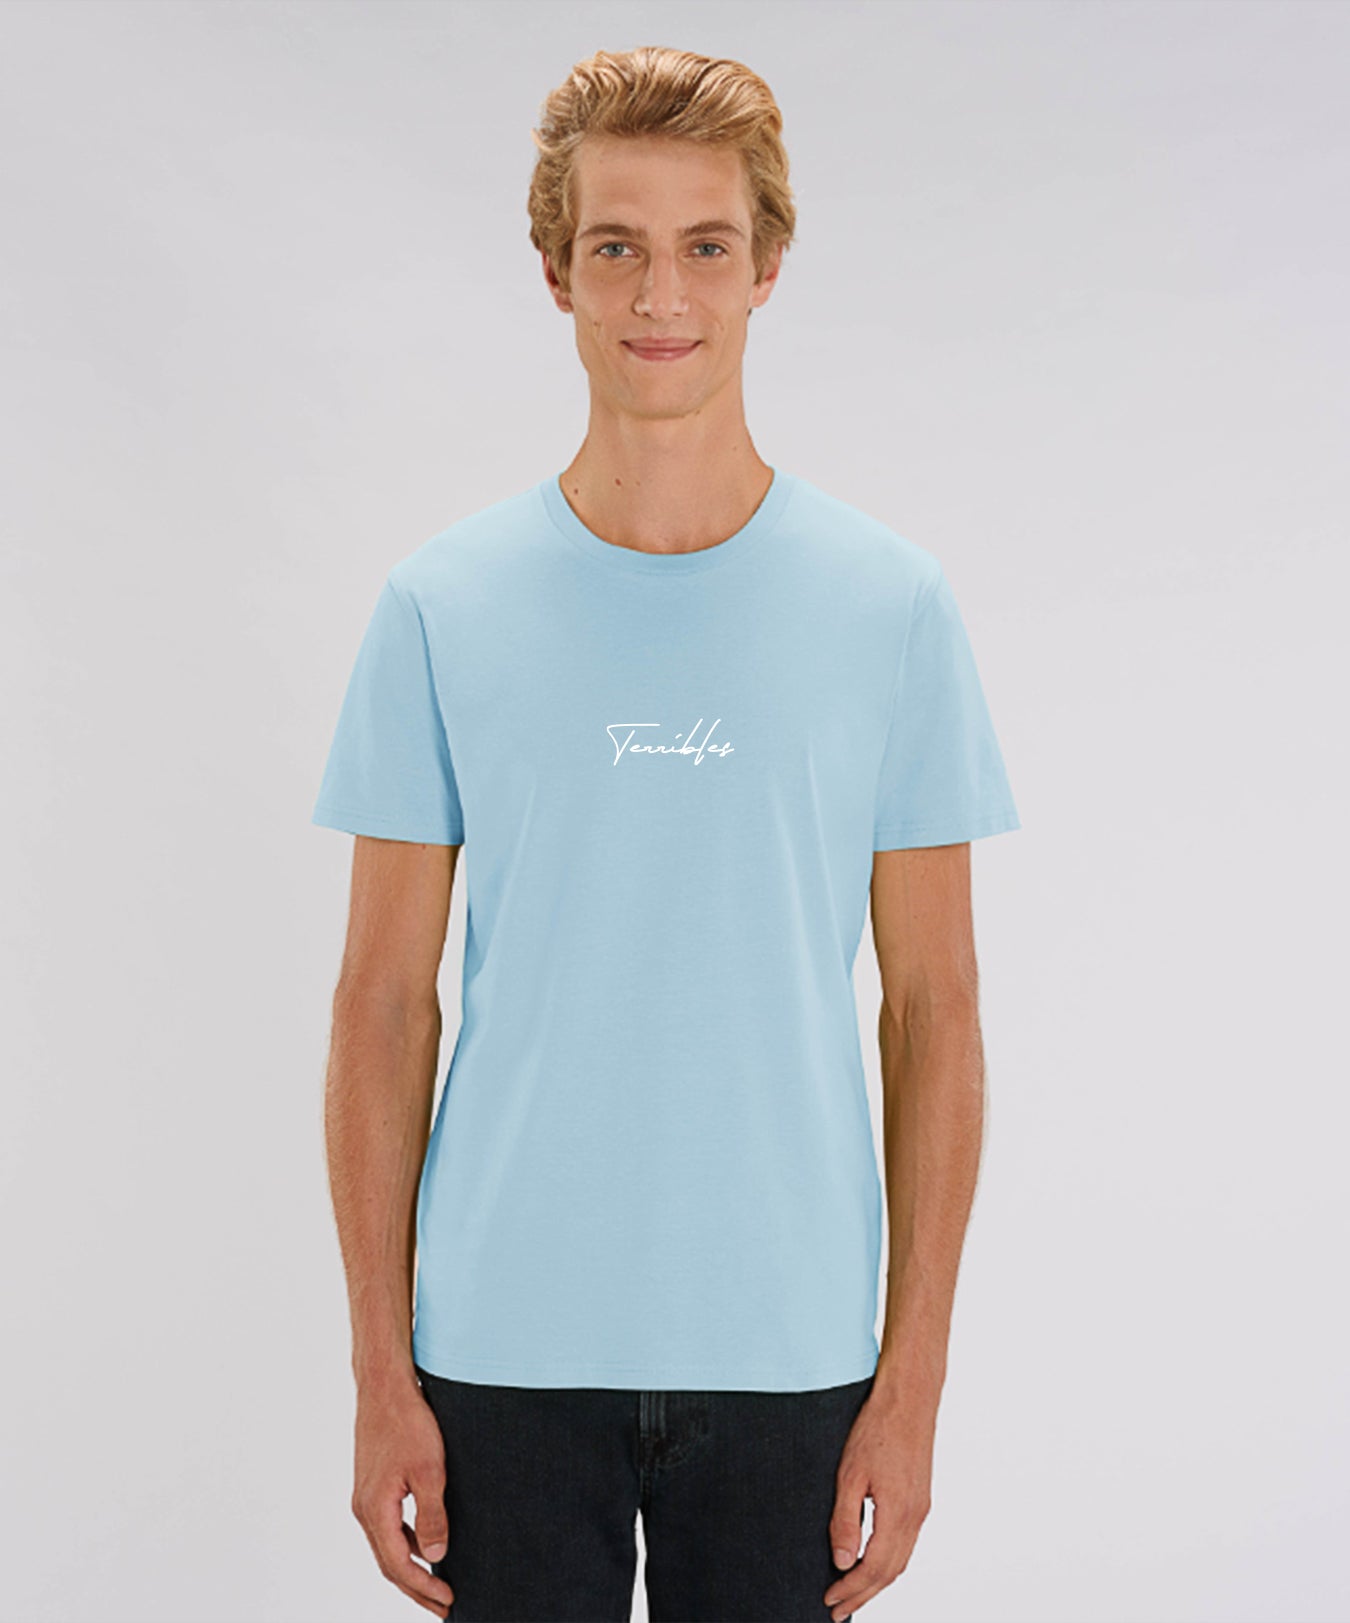 T-Shirt Unisexe Bleu avec logo 'Terribles' Blanc - Terribles Nantais